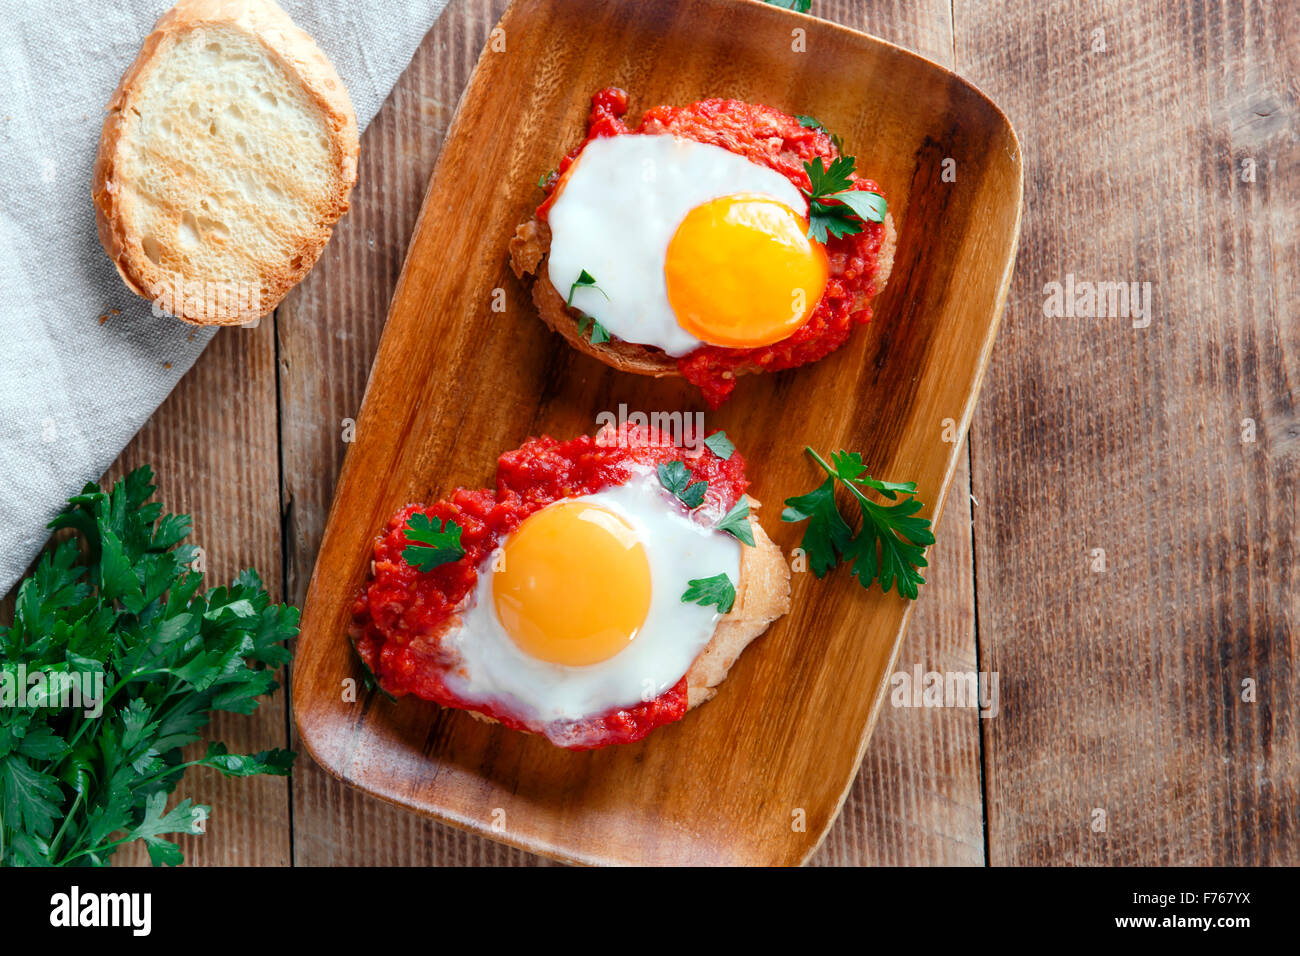 fried eggs with tomato sauce on bruschetta Stock Photo